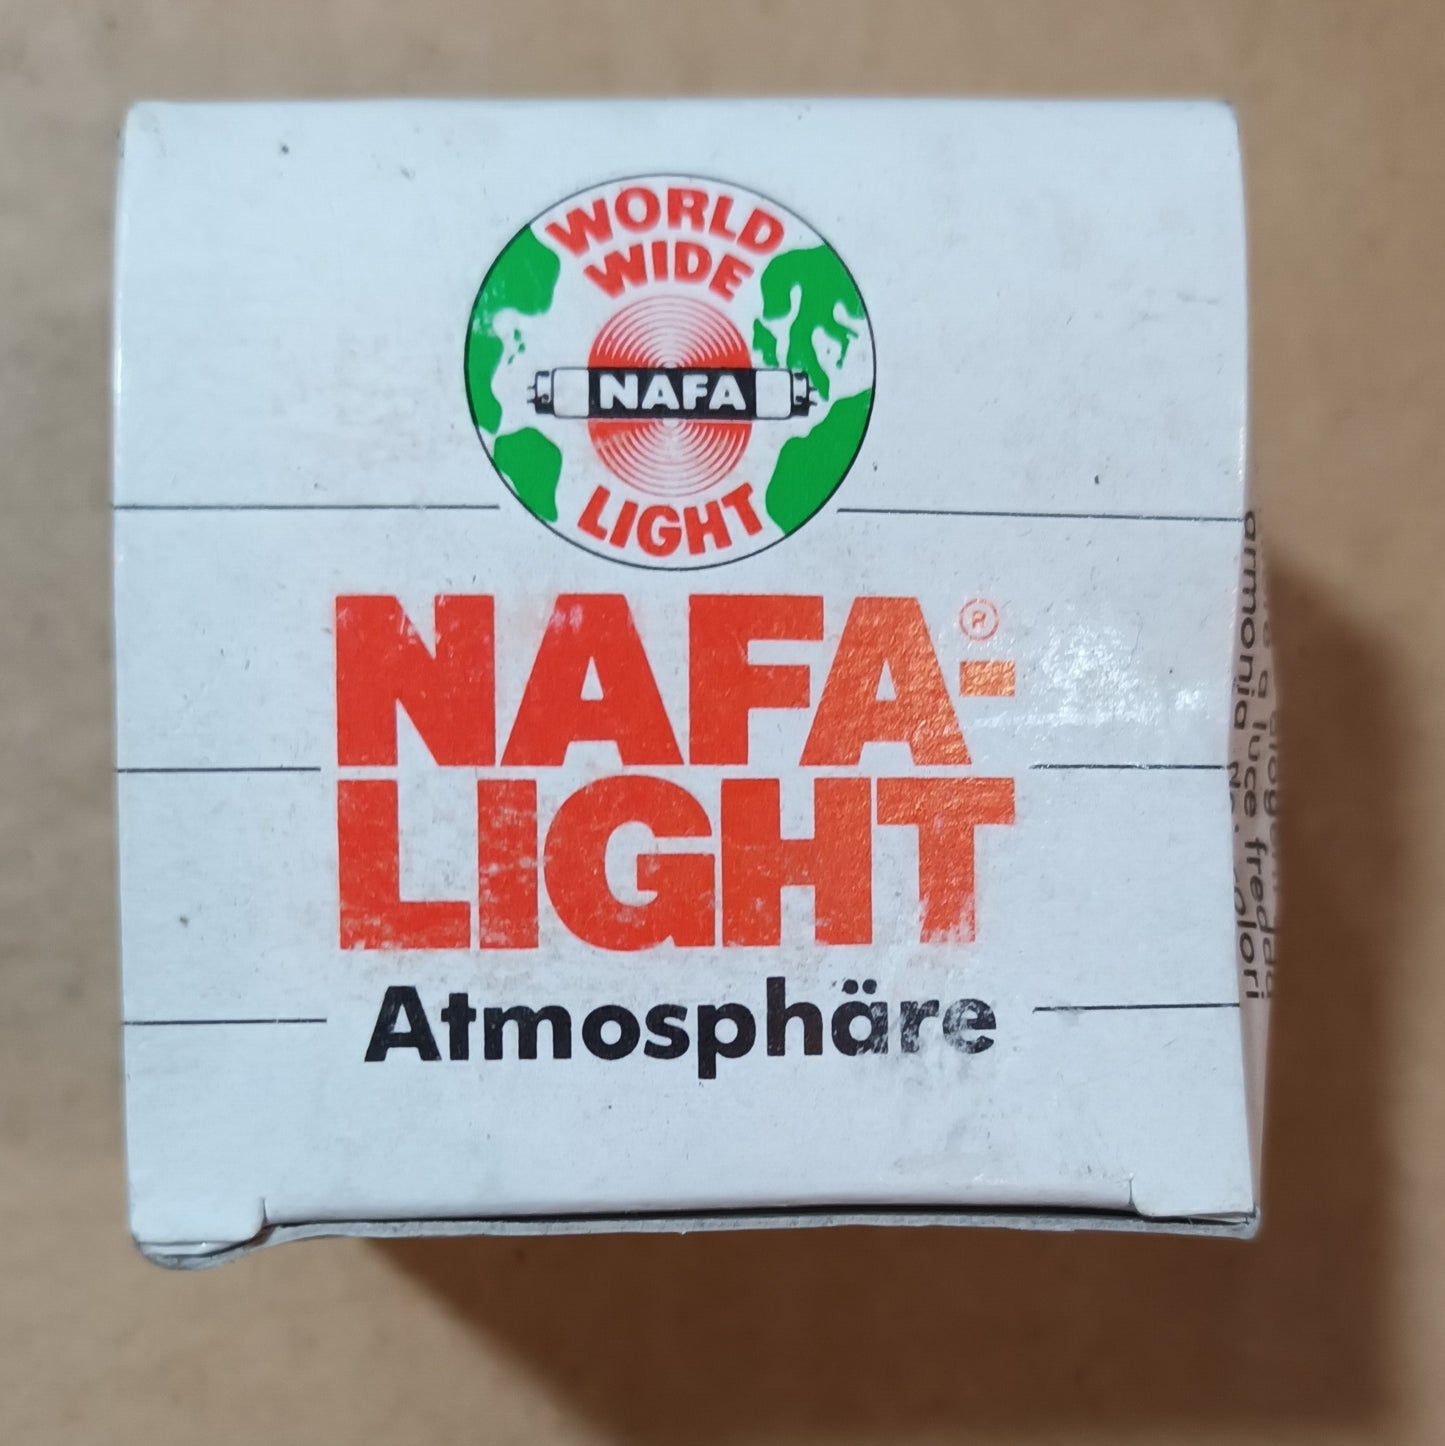 Nafa Butchers Light 50w 12v 2141U